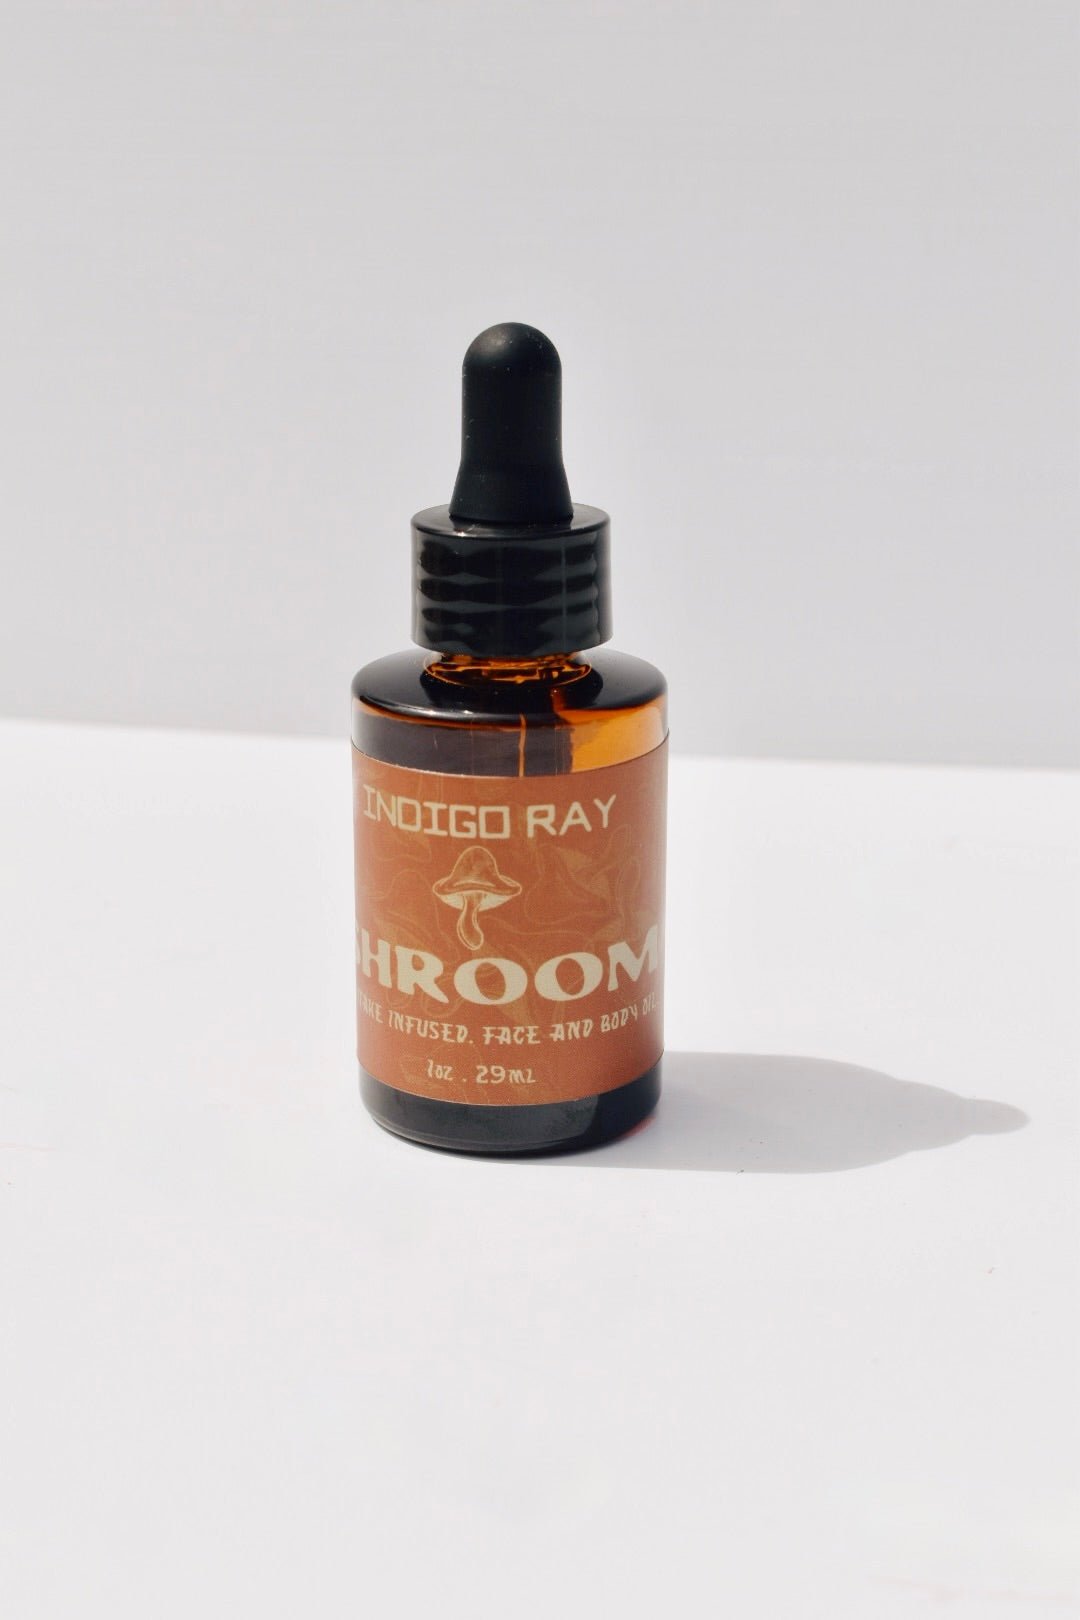 Shroom Face & Body Oil - Ardent Market - Indigo Ray Botanicals